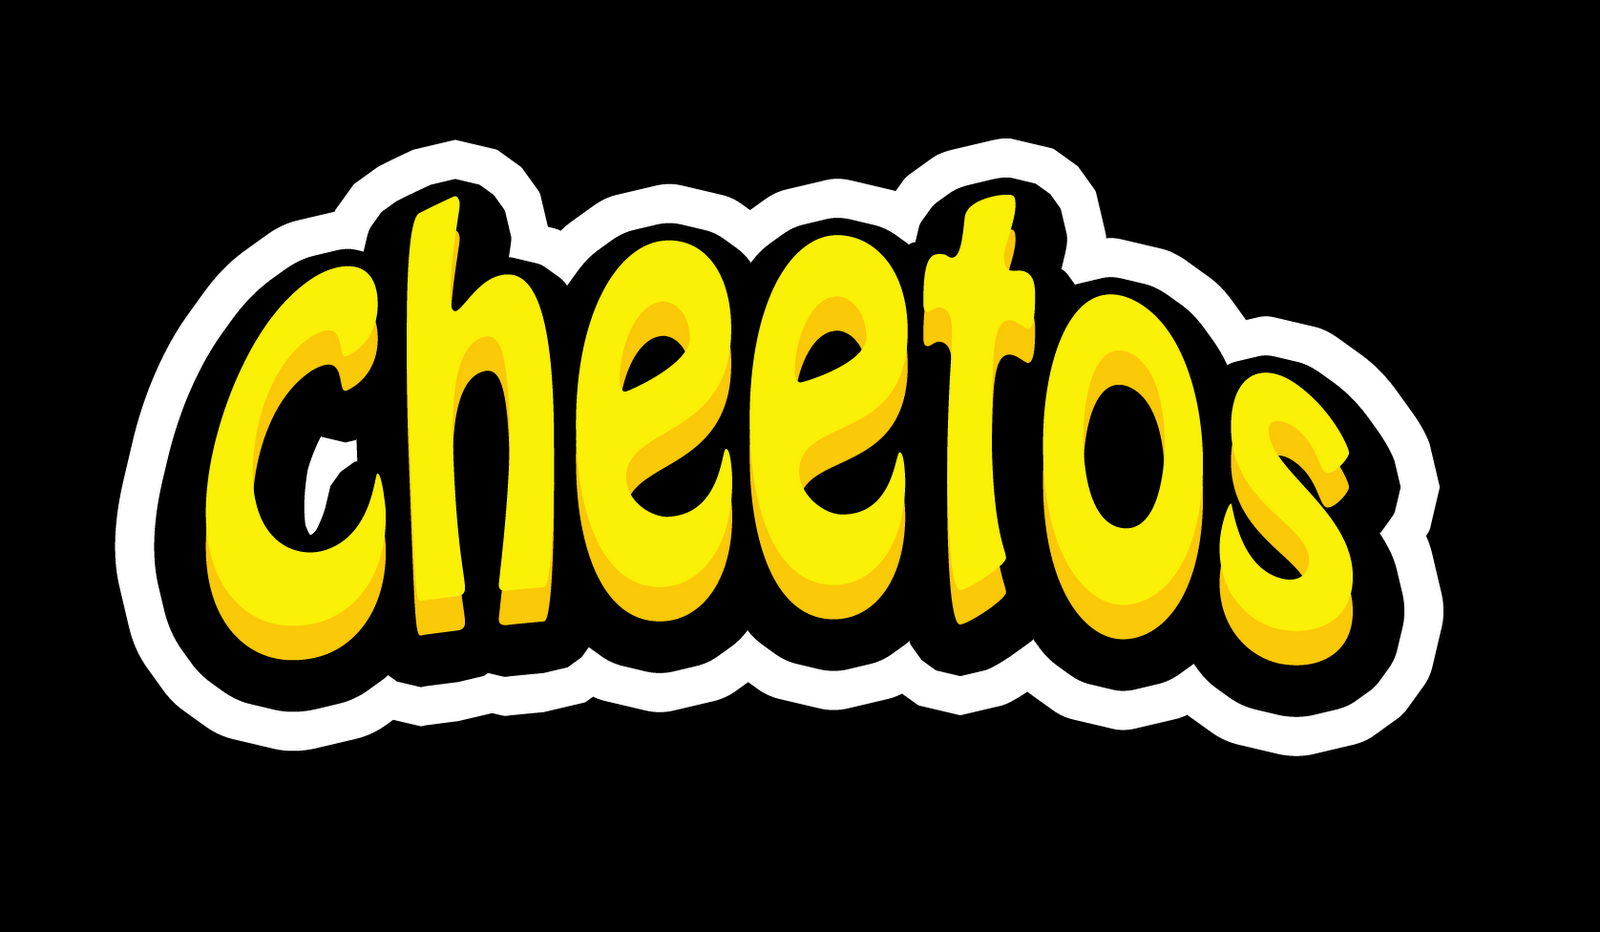 Hot cheetos Logos